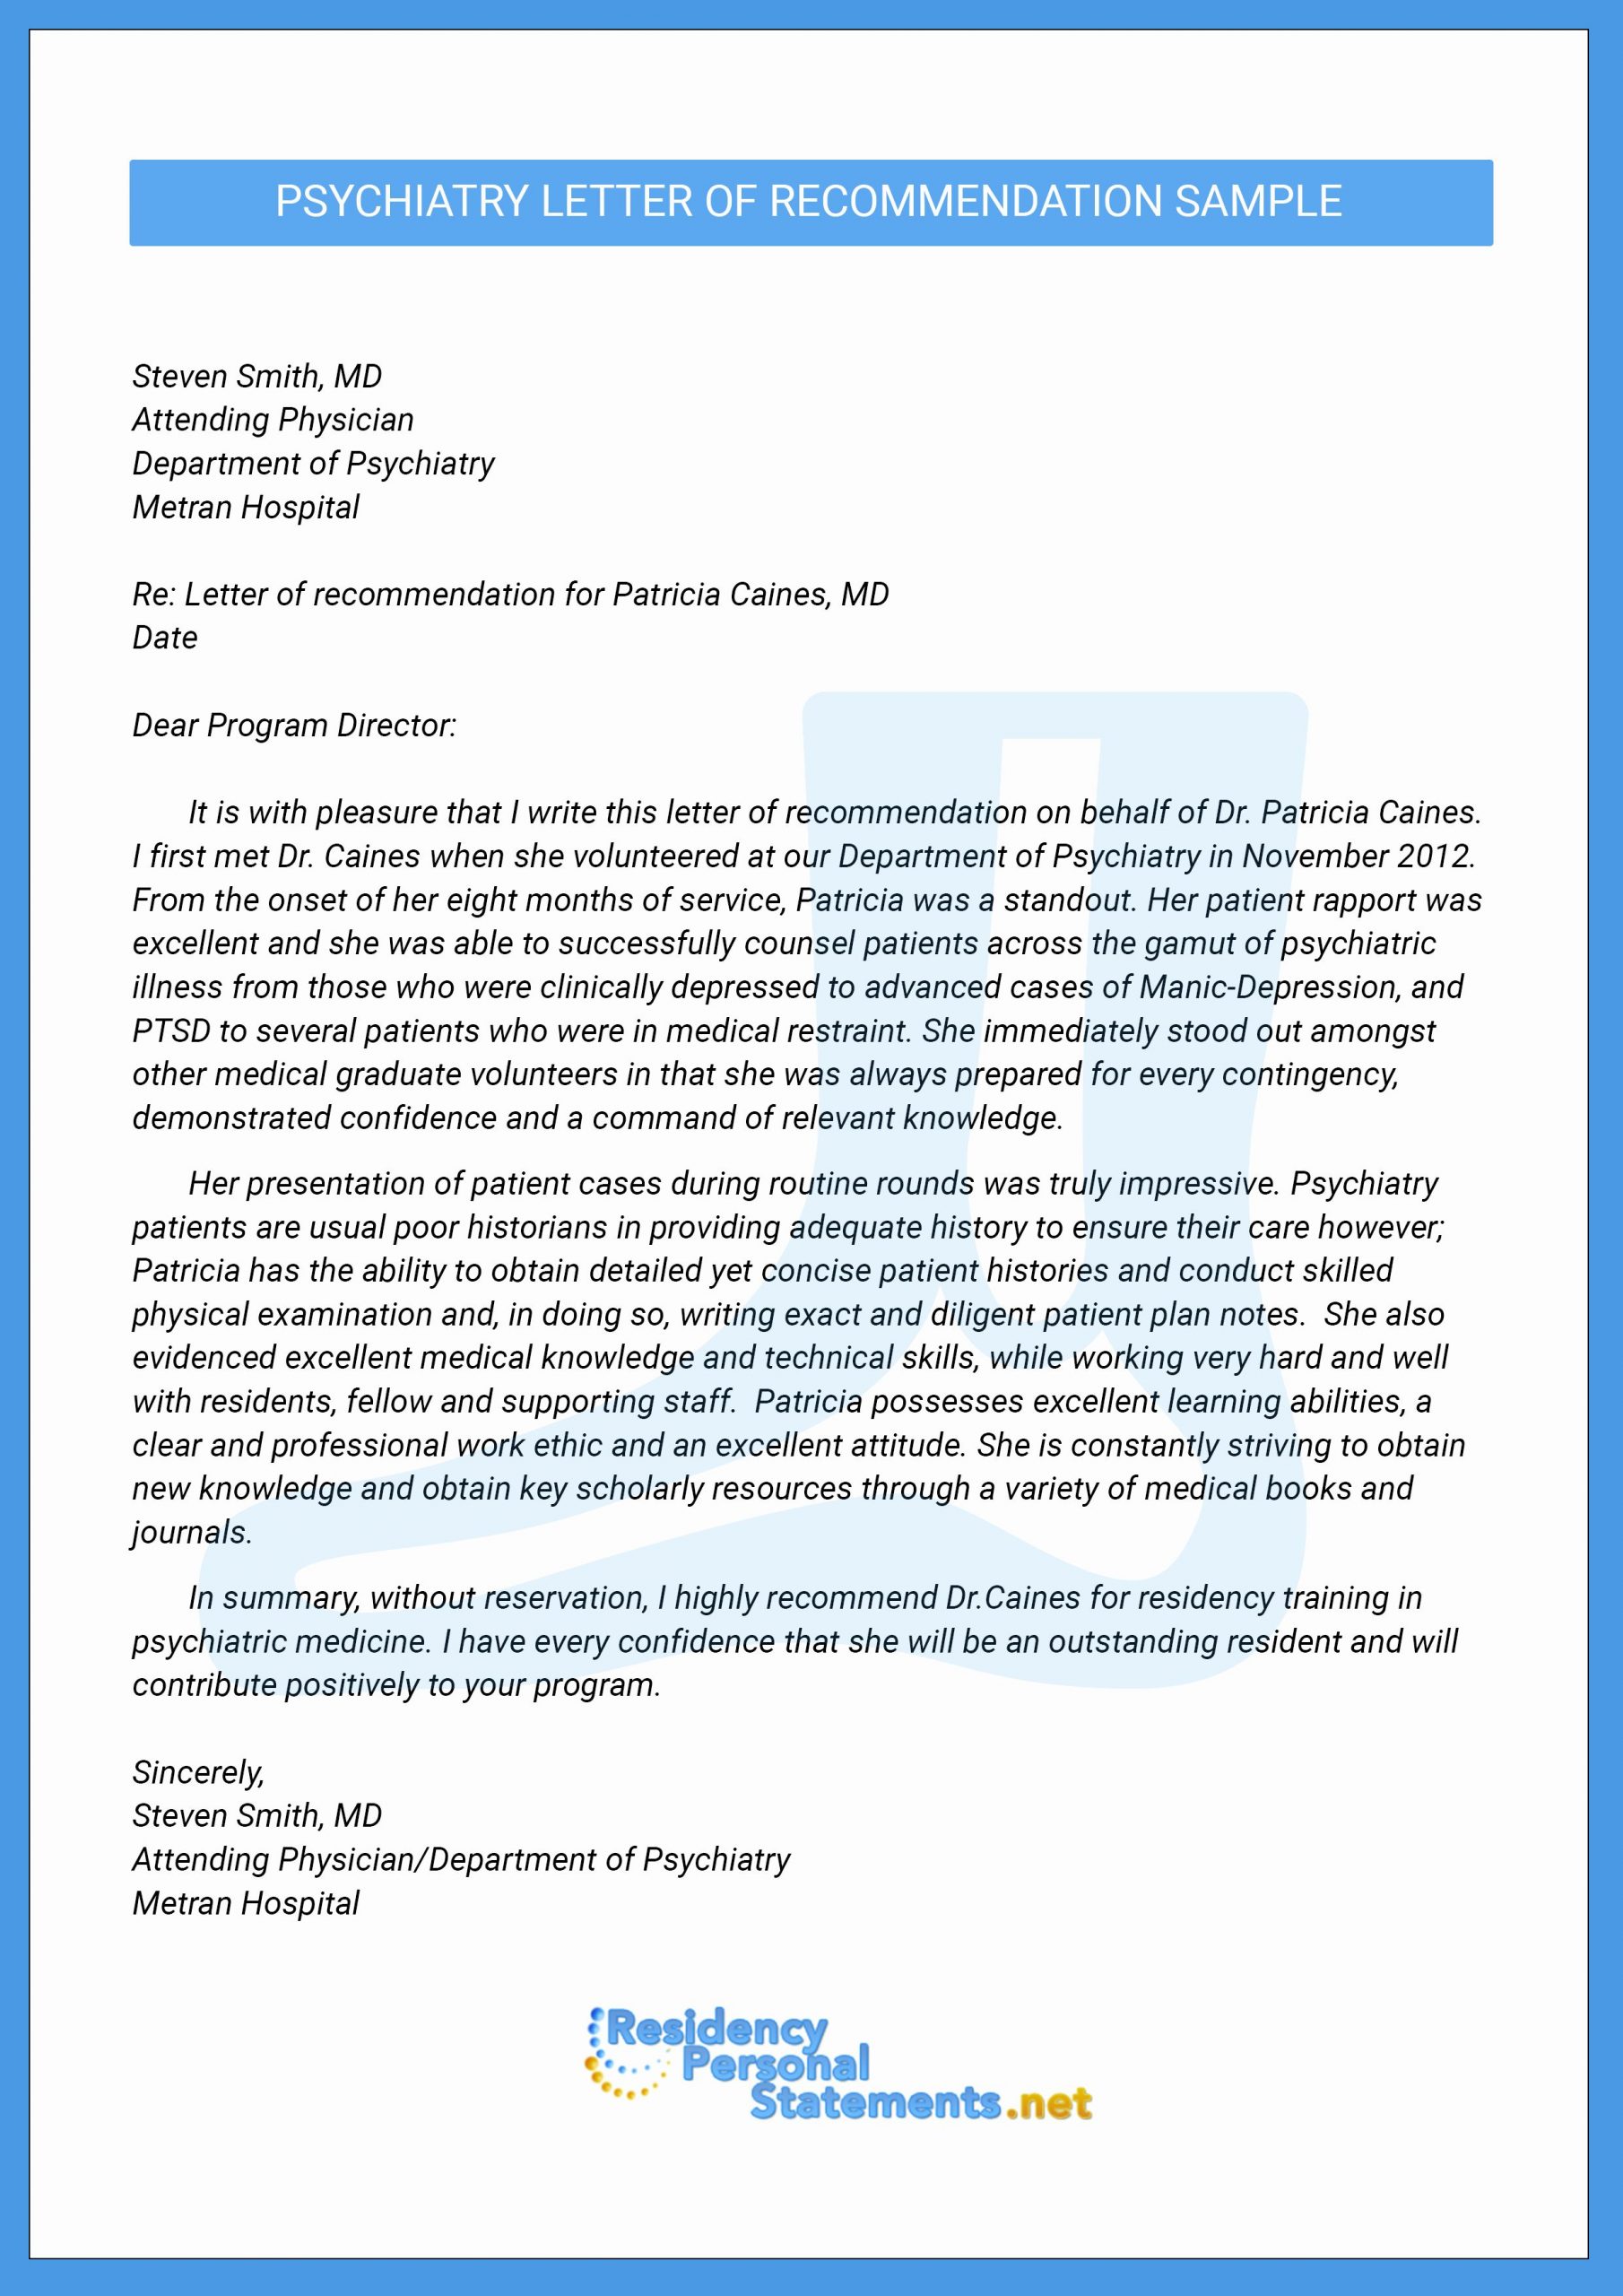 sample-letter-of-recommendation-for-psychiatry-residency-invitation